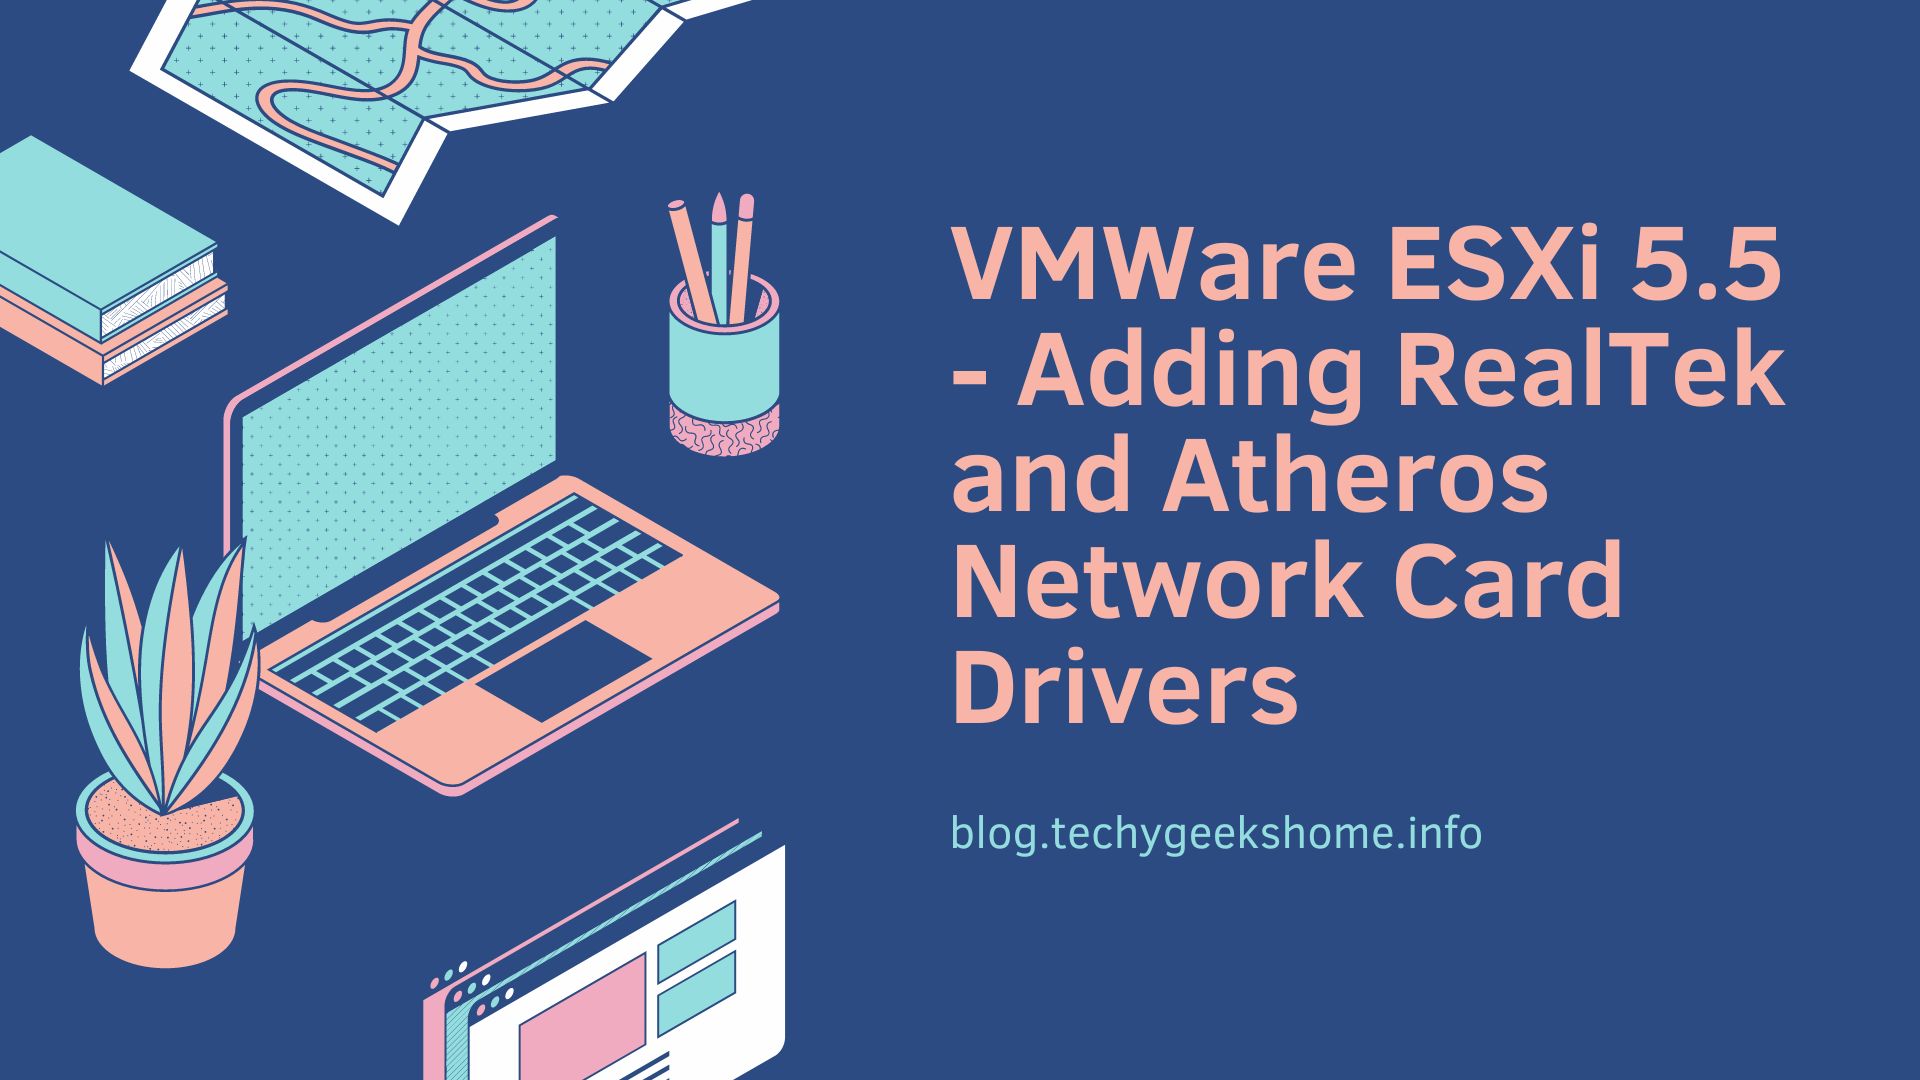 VMWare ESXi 5.5 - Adding RealTek and Atheros Network Card Drivers